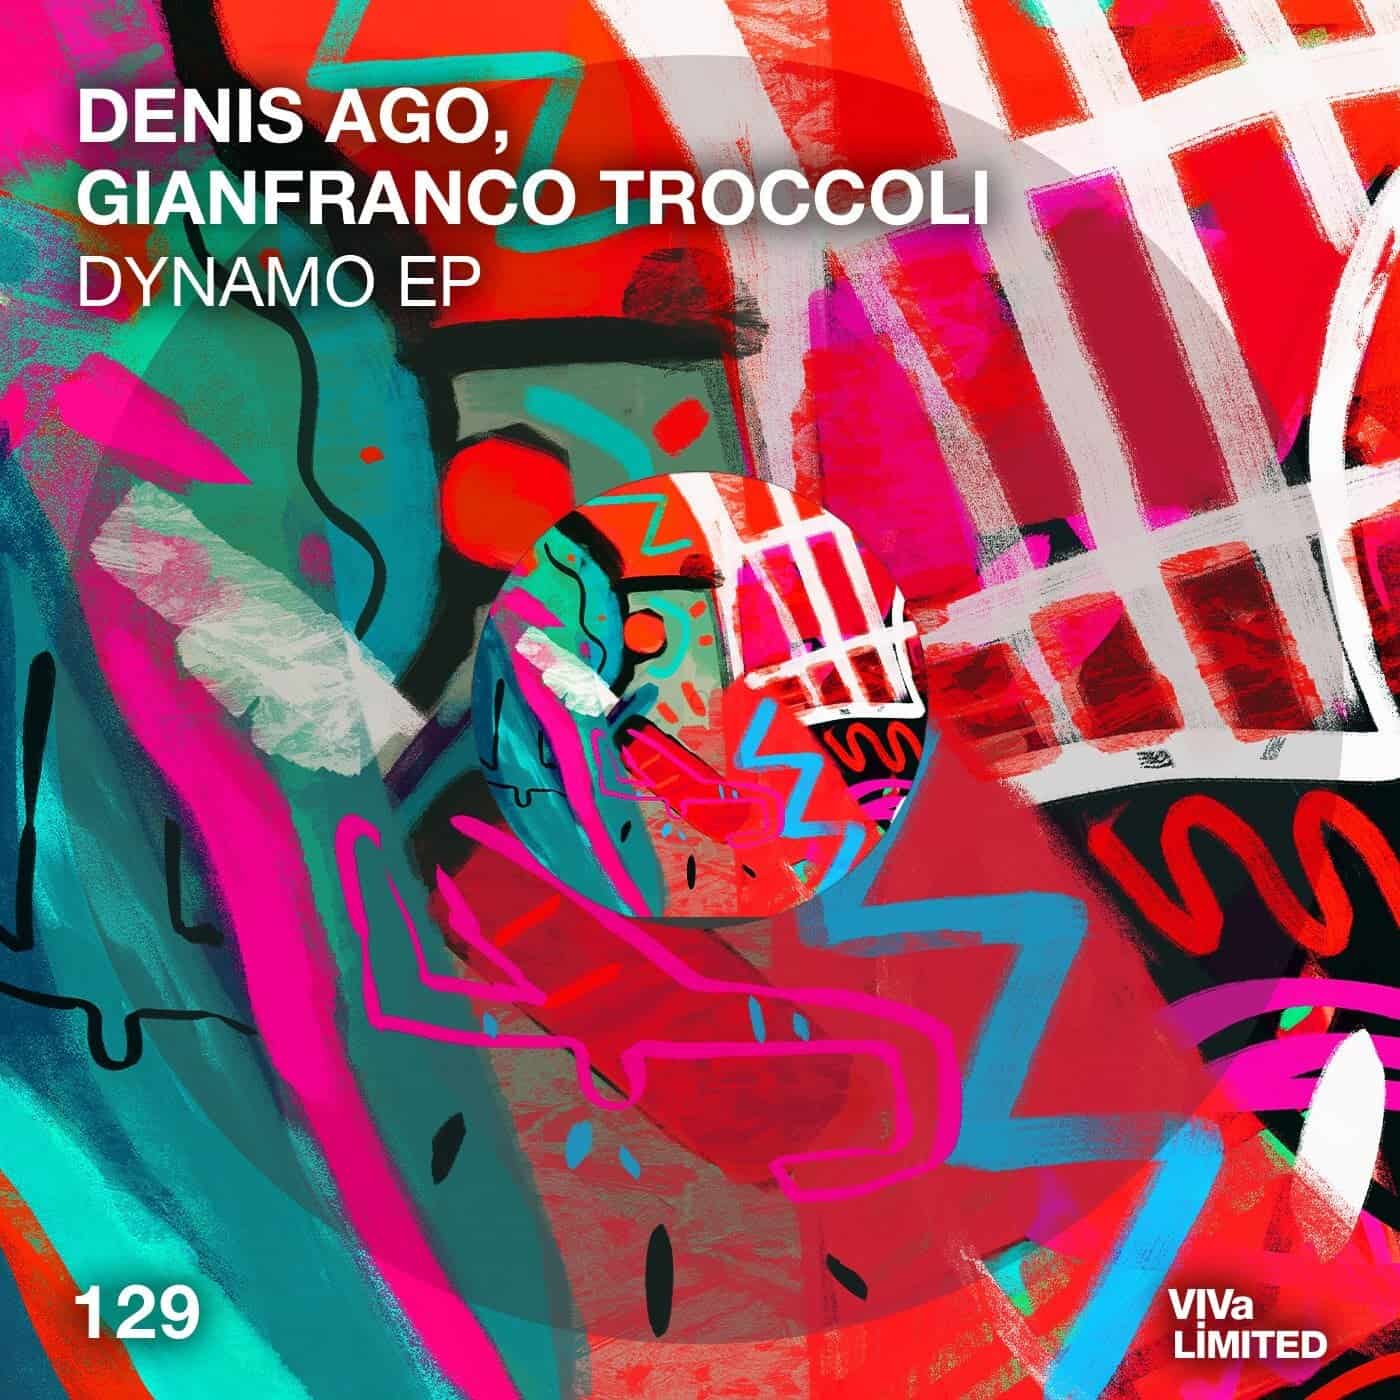 Download Gianfranco Troccoli, Denis Ago - Dynamo EP on Electrobuzz